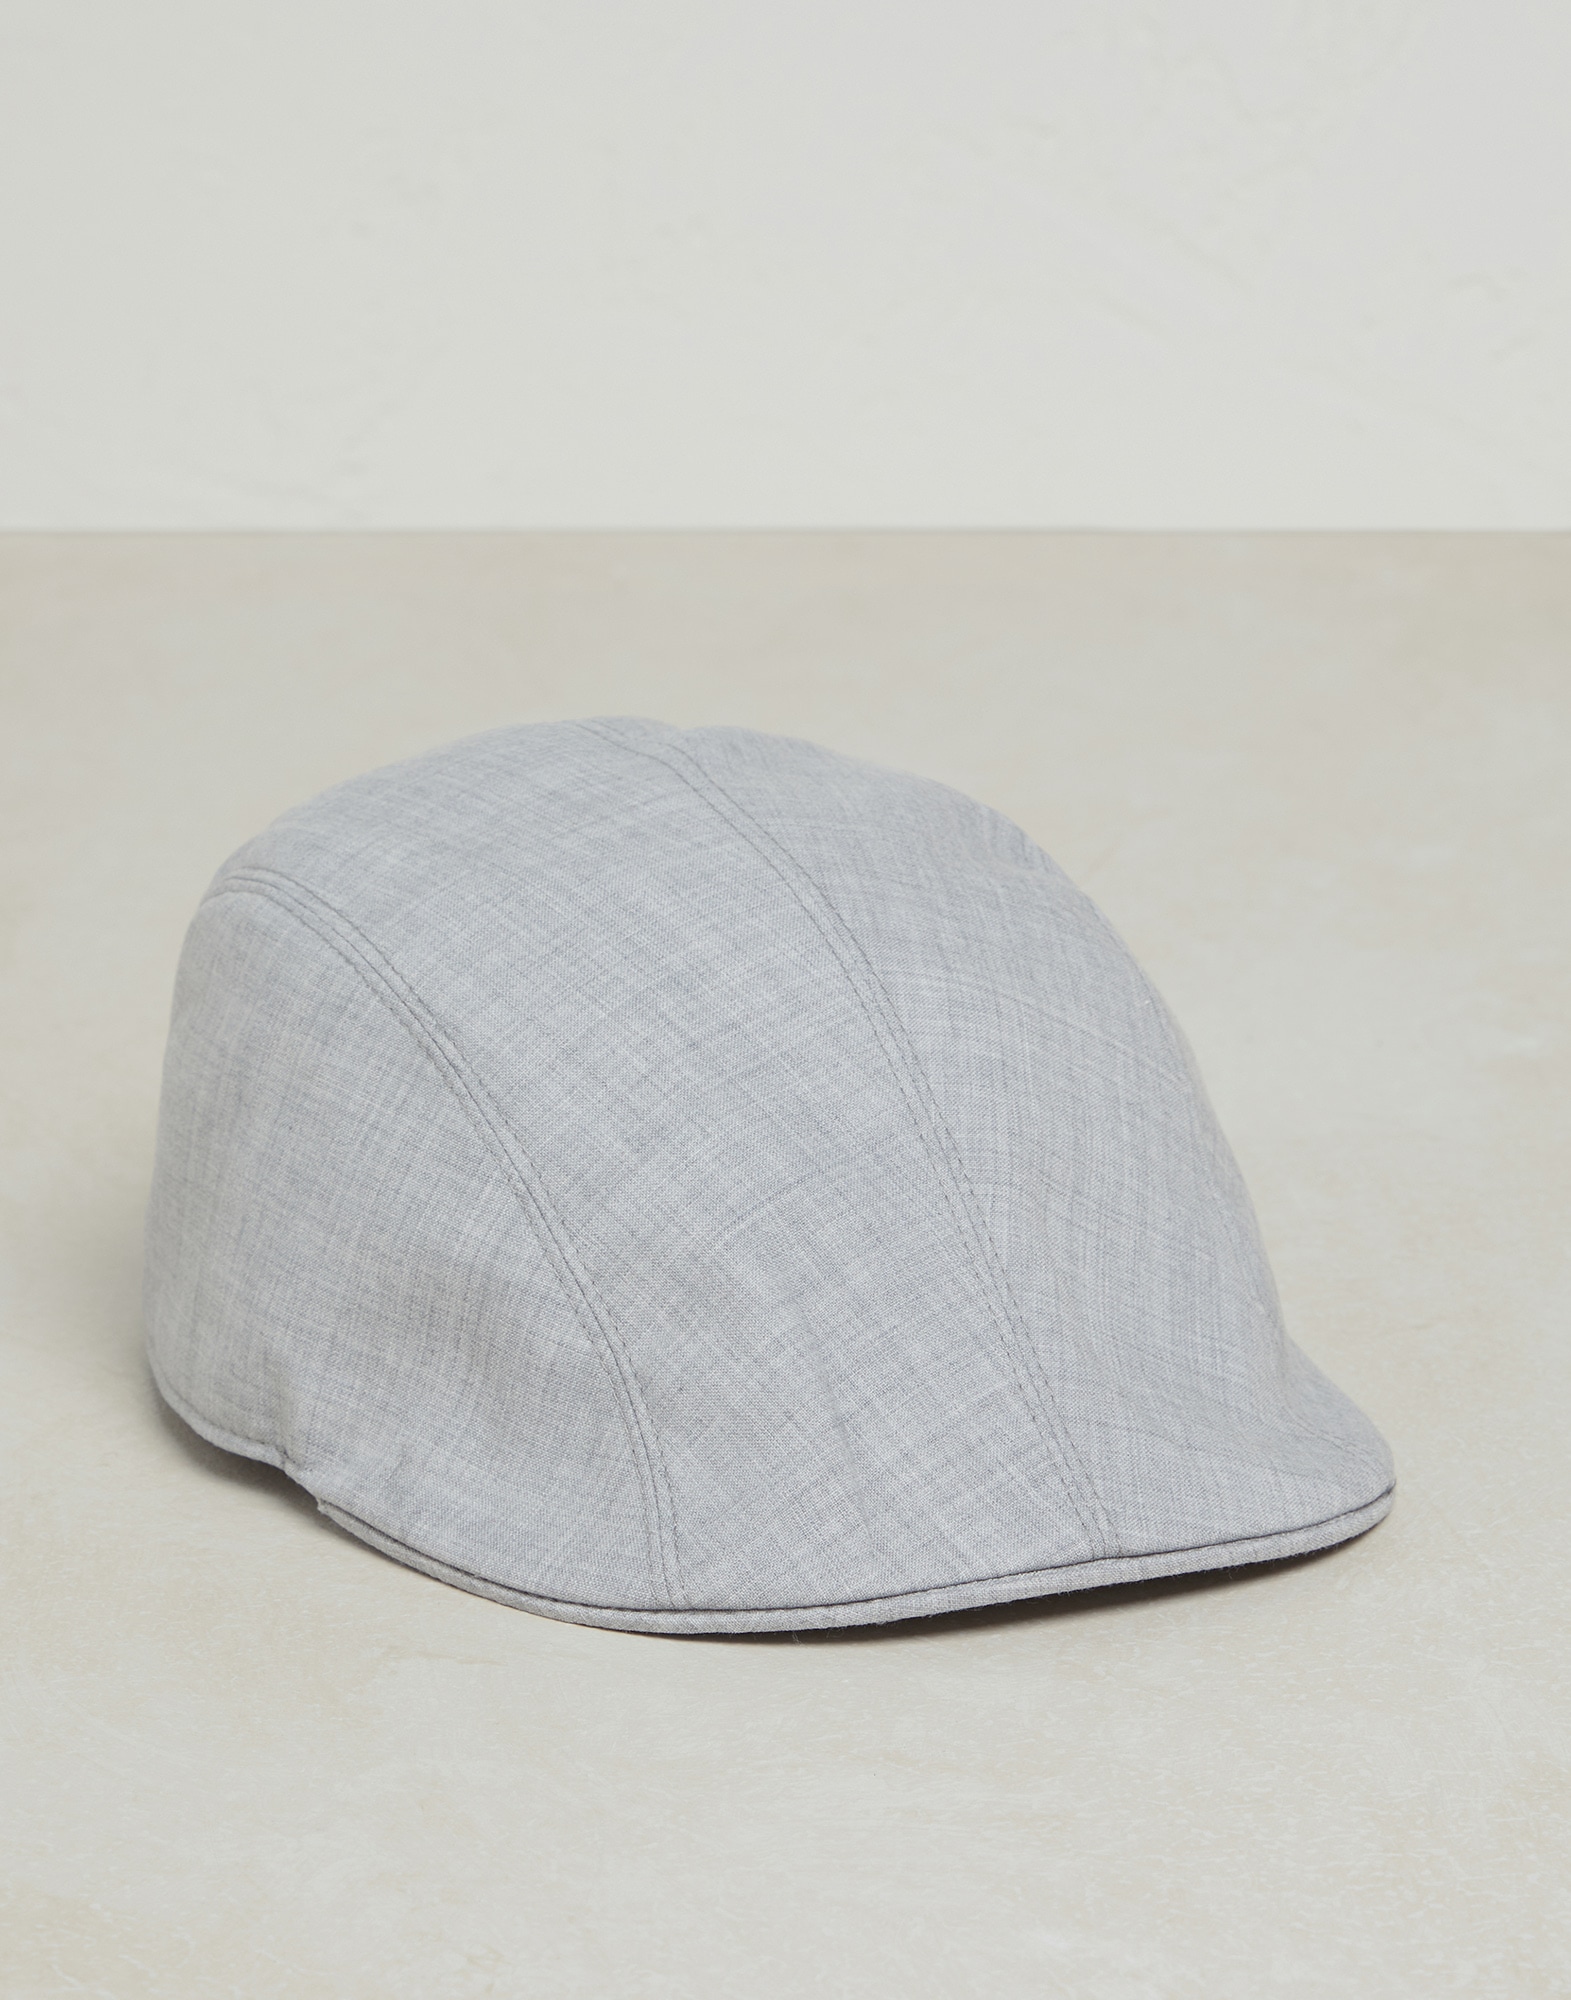 Flat cap